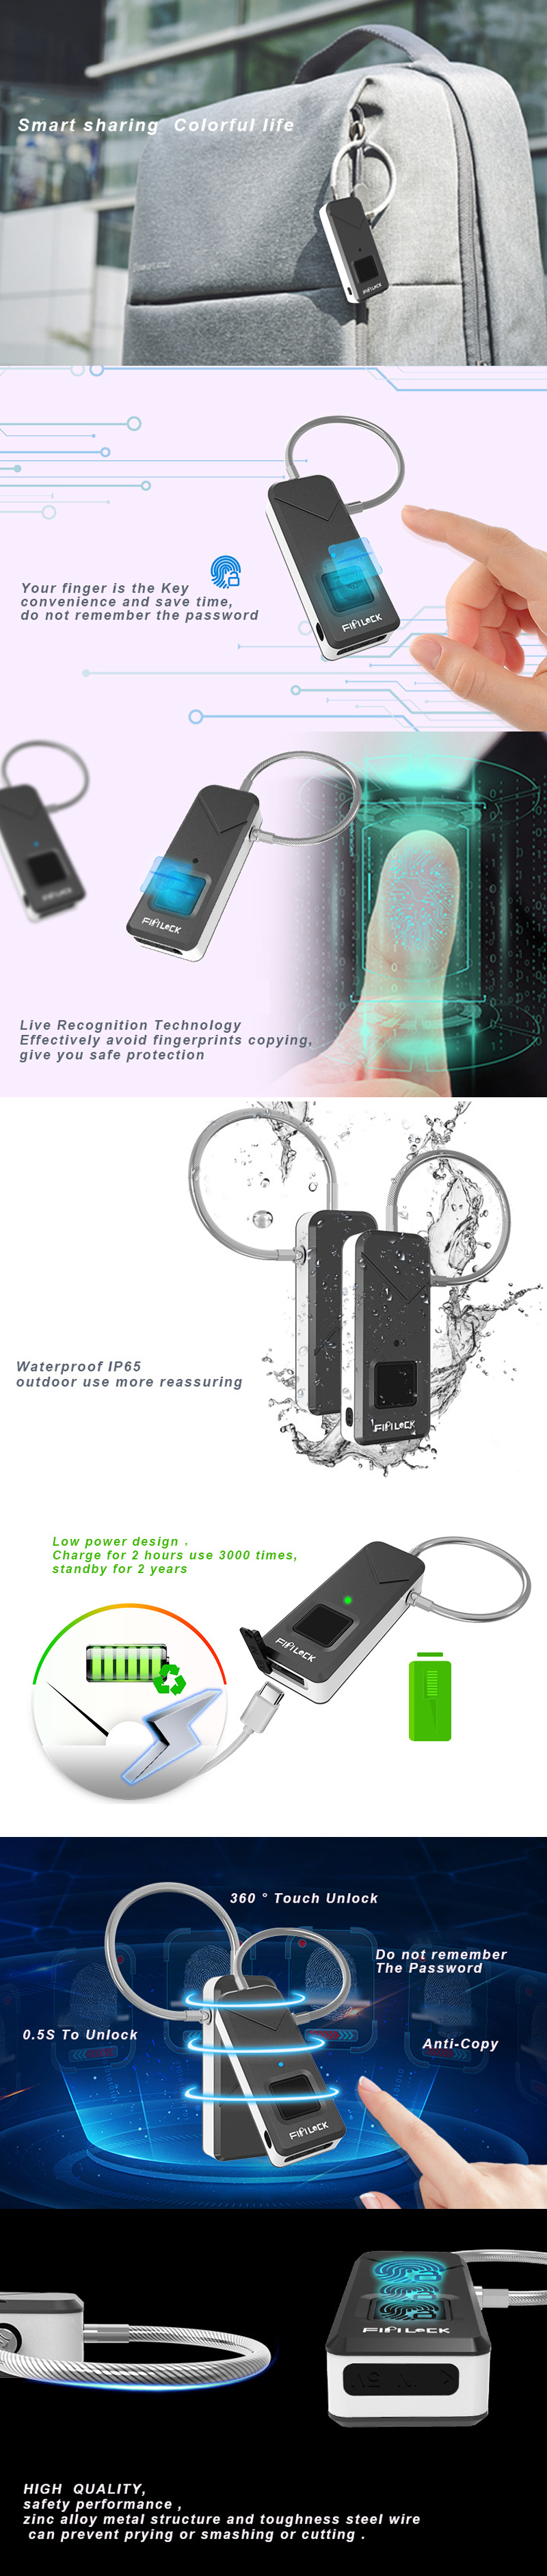 IPReereg-37V-Smart-Anti-theft-USB-Fingerprint-Lock-IP65-Waterproof-Travel-Suitcase-Luggage-Bag-Safet-1521856-1